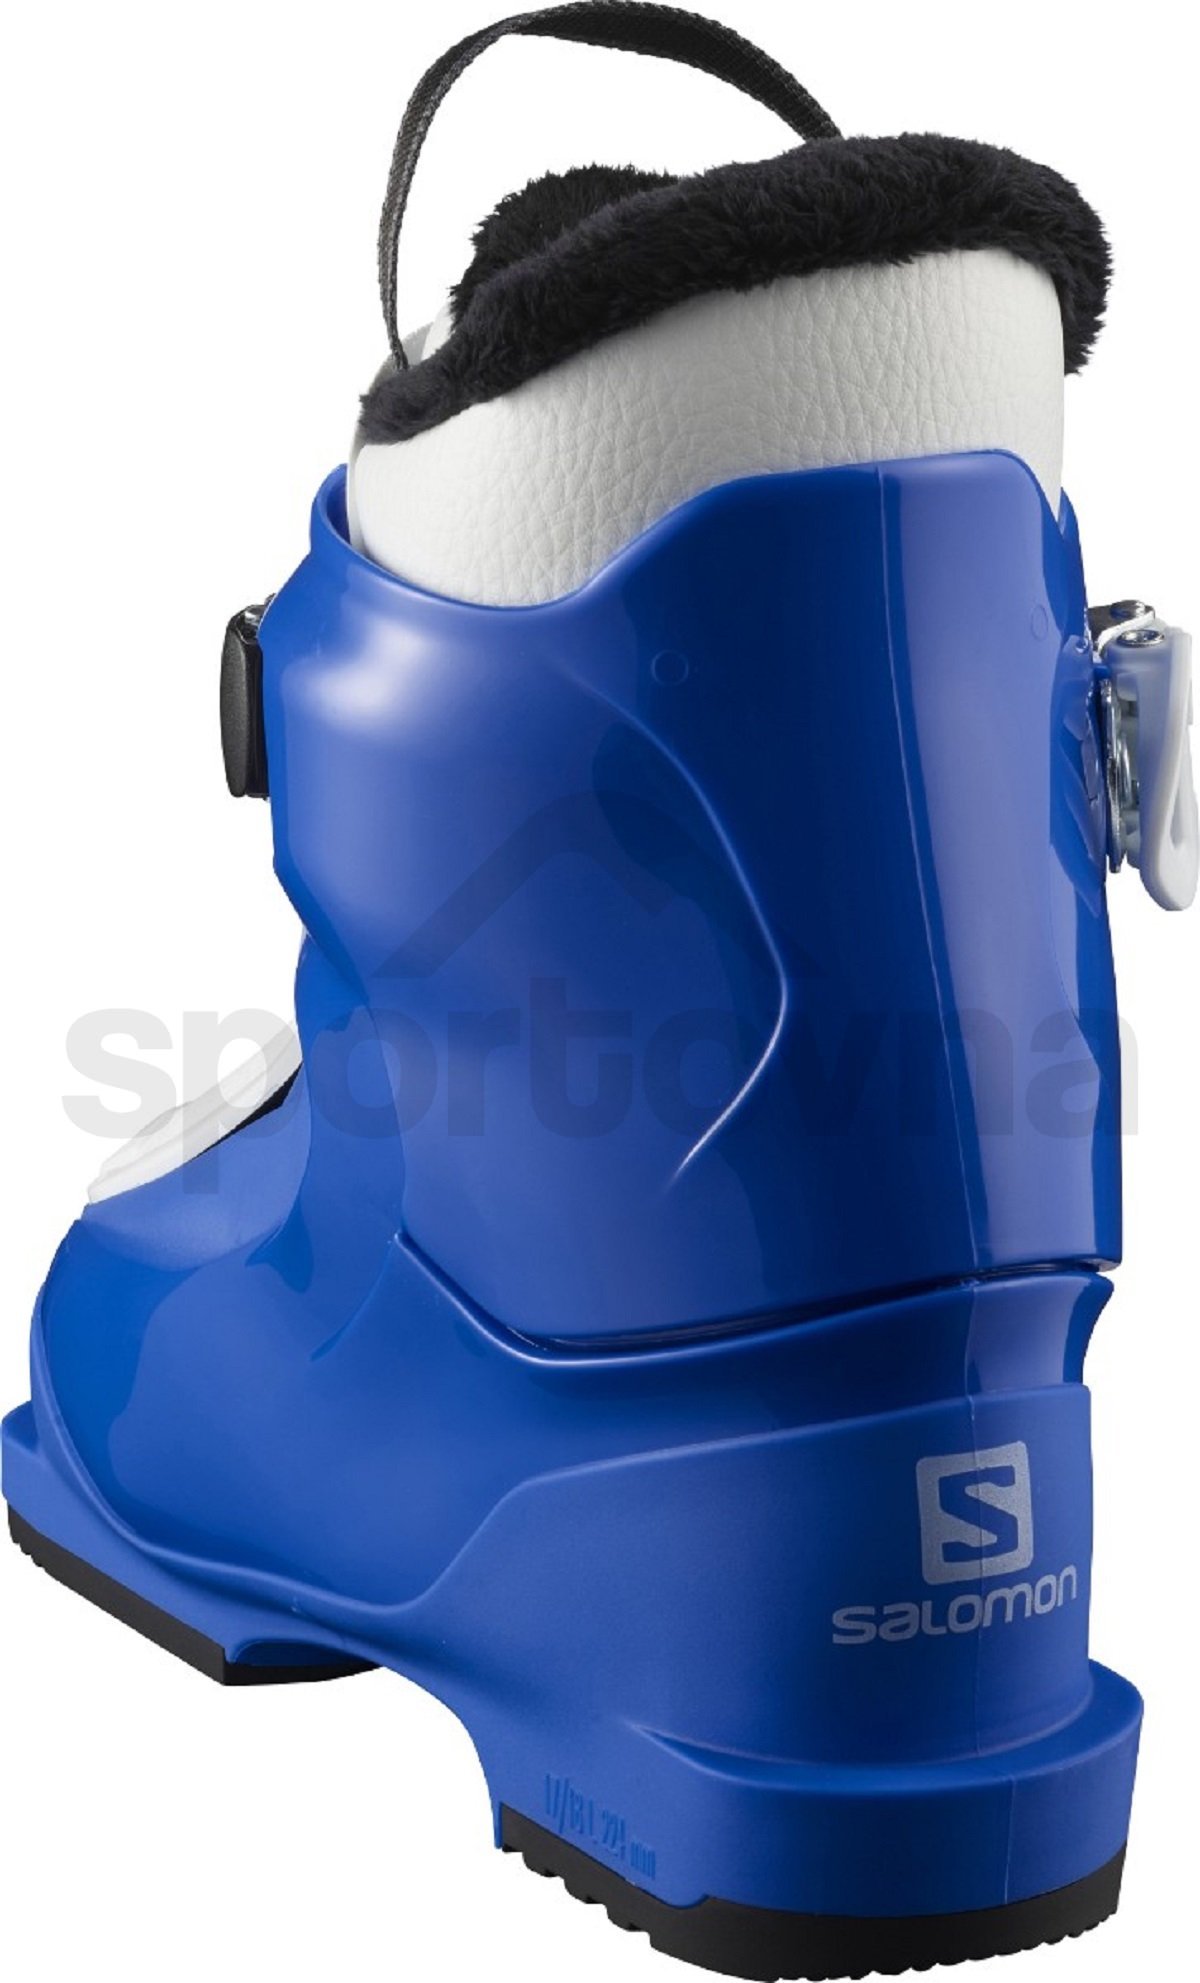 Lyžařské boty Salomon T1 Race - modrá/bílá